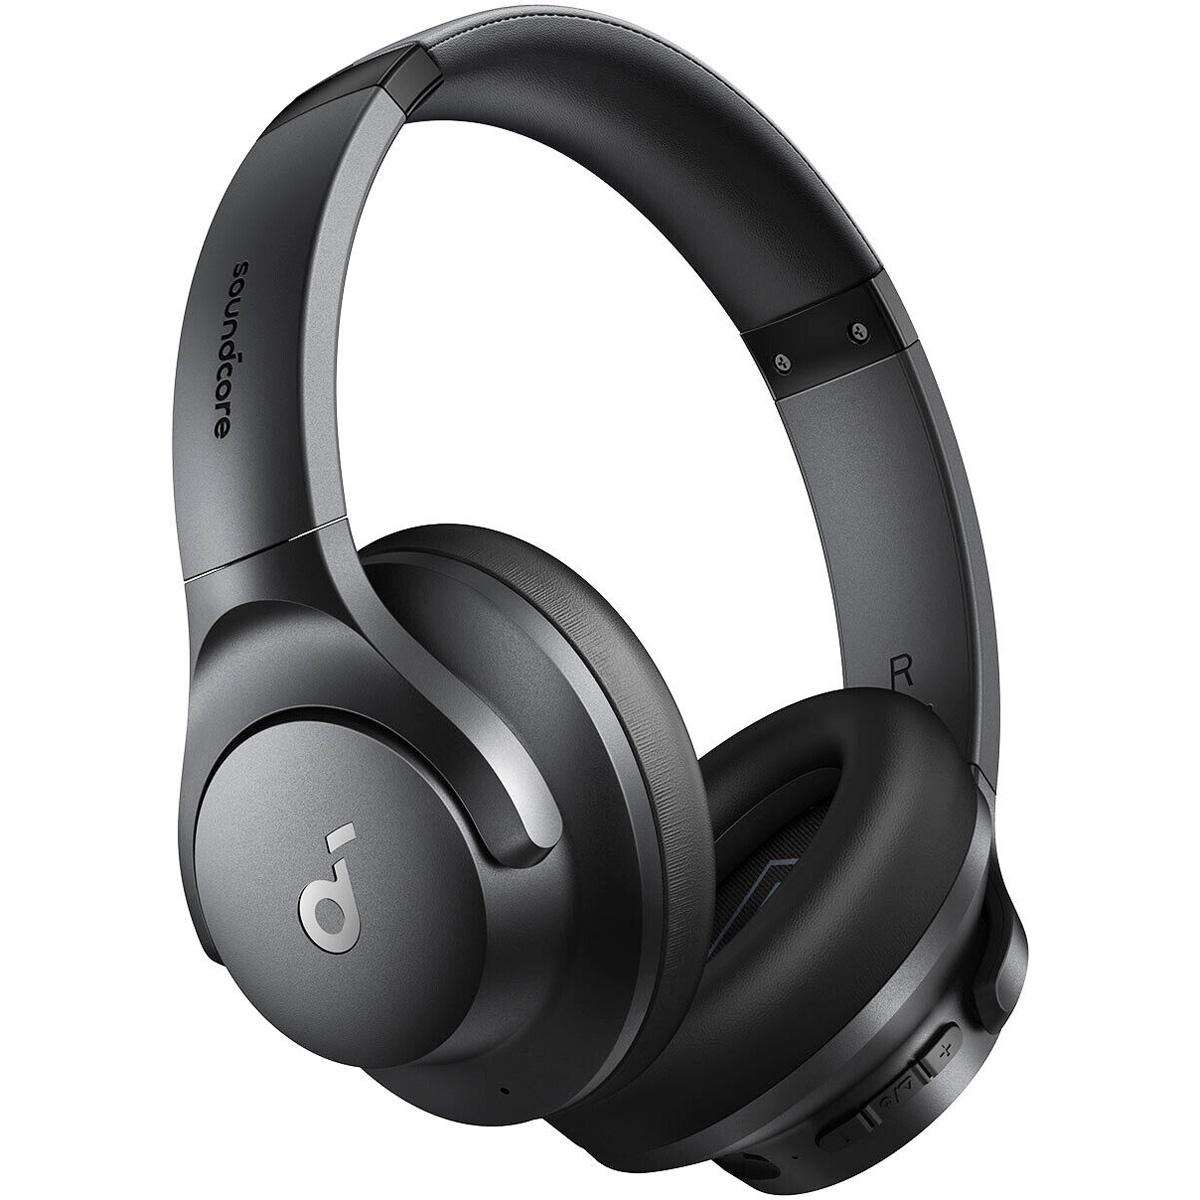 Anker Soundcore Q20i True Wireless Over-the-Ear Headphones for $39.99 Shipped